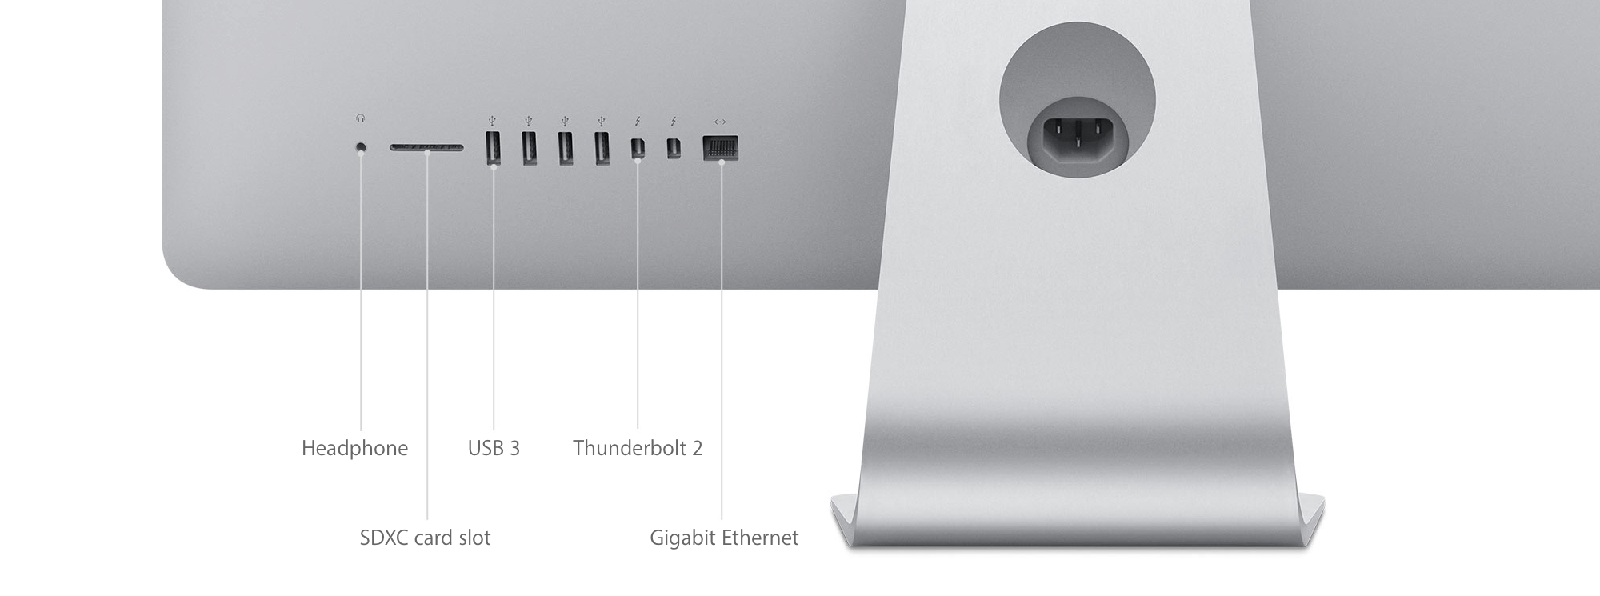 Apple iMac 21.5 inch Late 2015 - Computer Service webshop ...